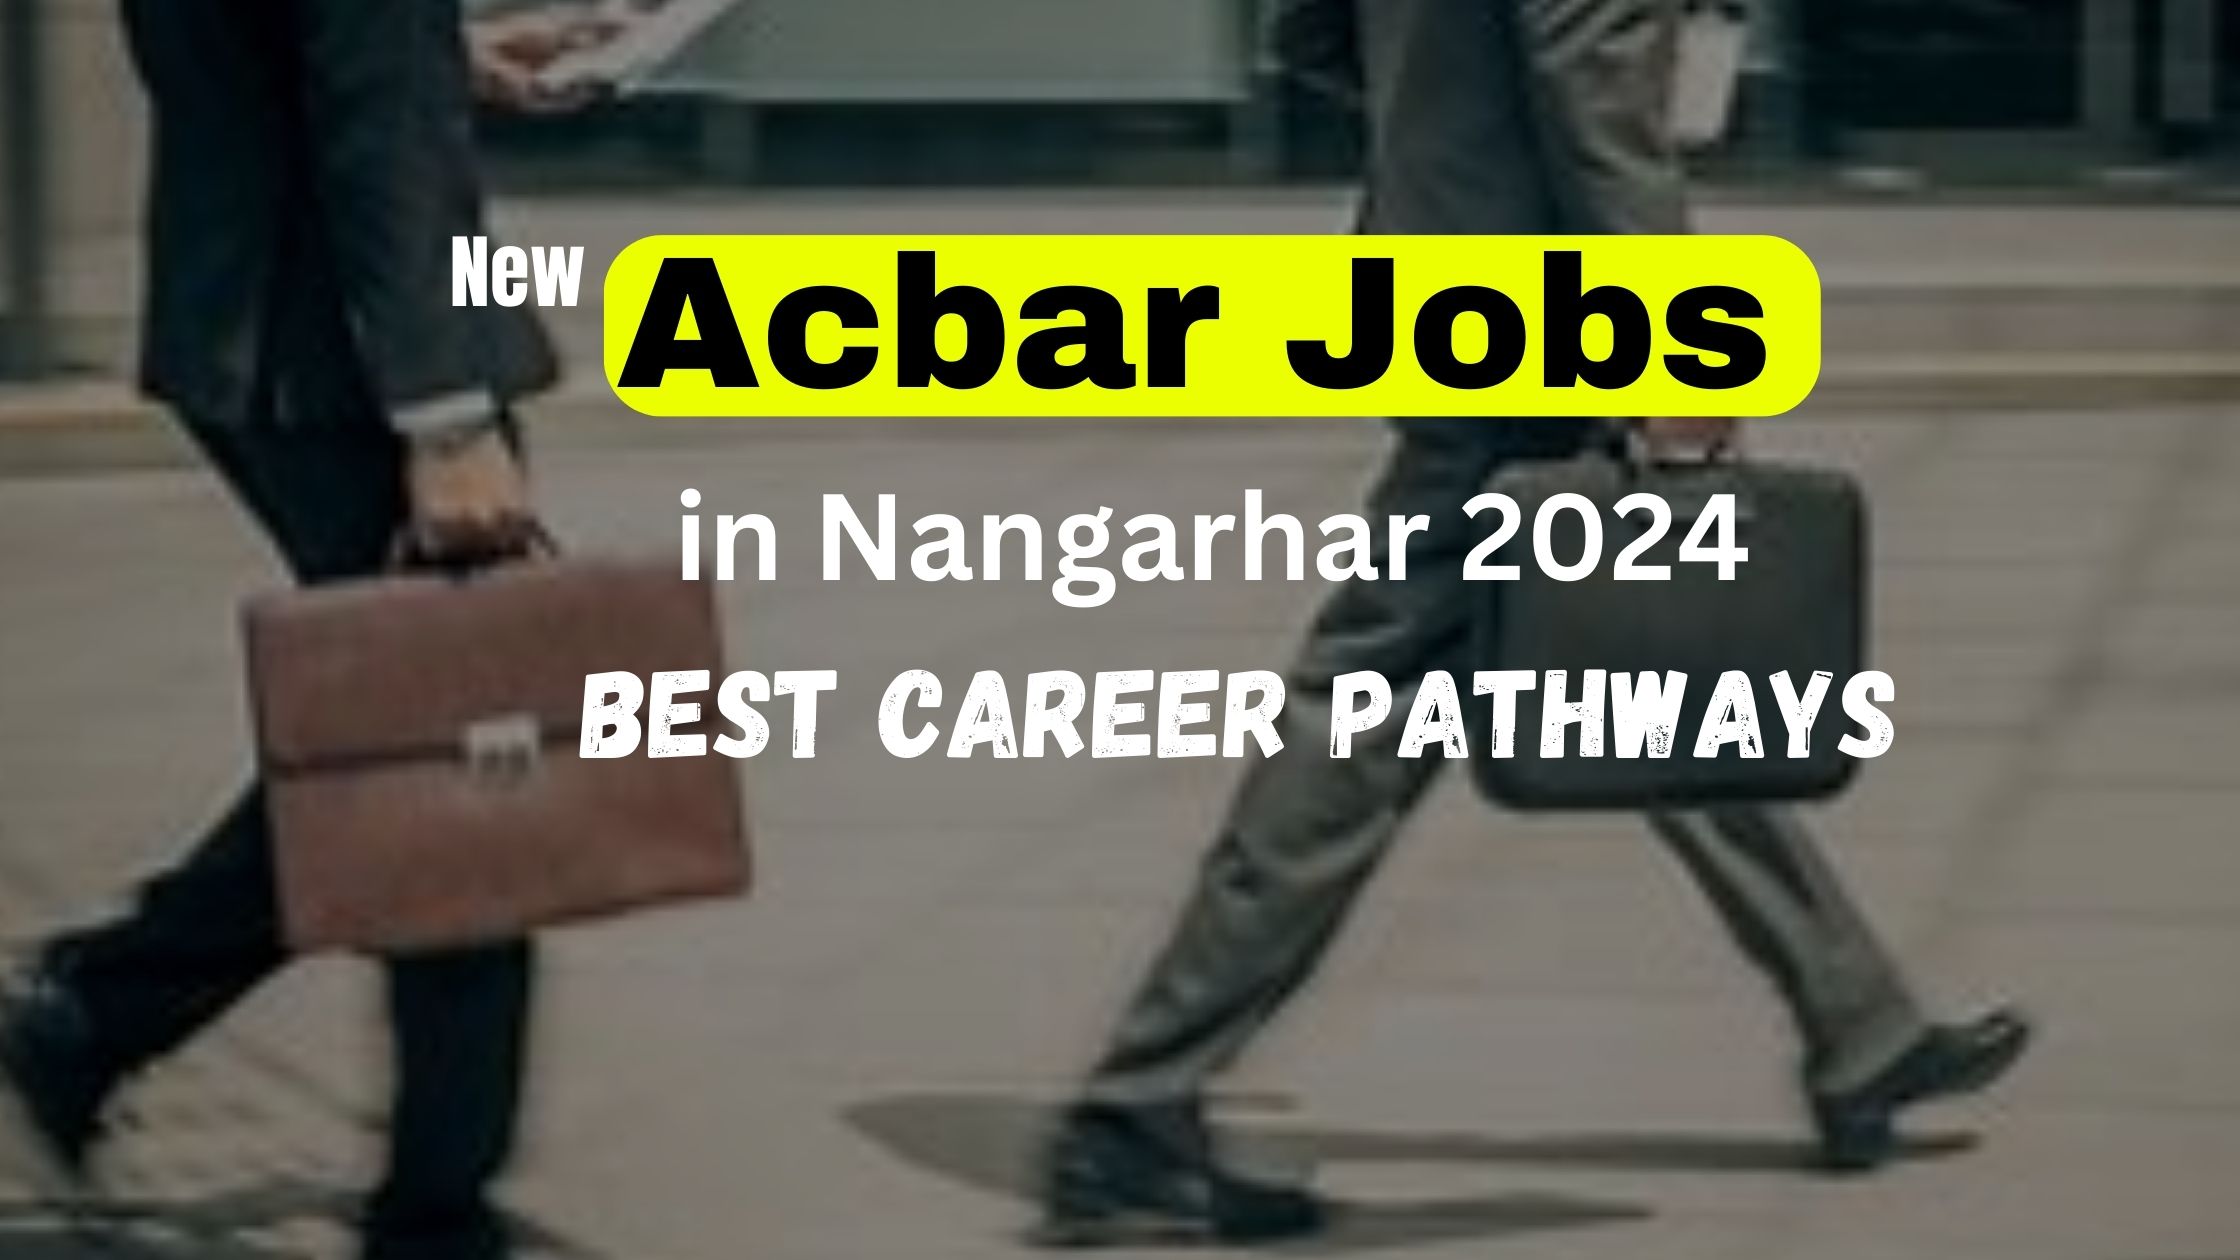 New Acbar Jobs in Nangarhar 2024 Best Career Pathways